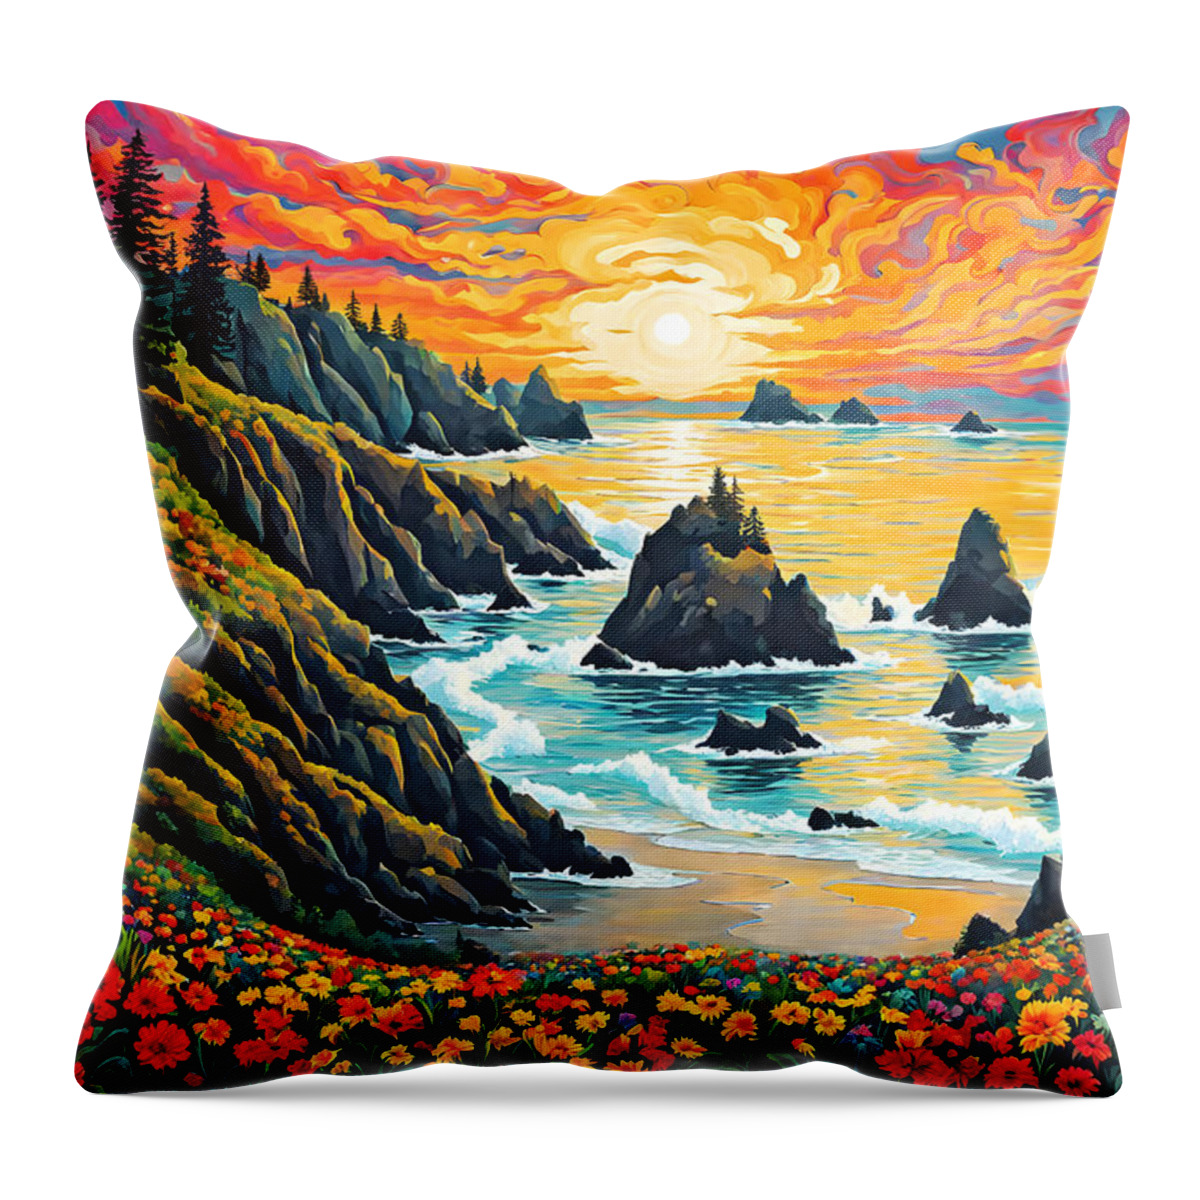 Sunset On The Oregon Coast Throw Pillow featuring the digital art Sunset On The Oregon Coast by Two Hivelys